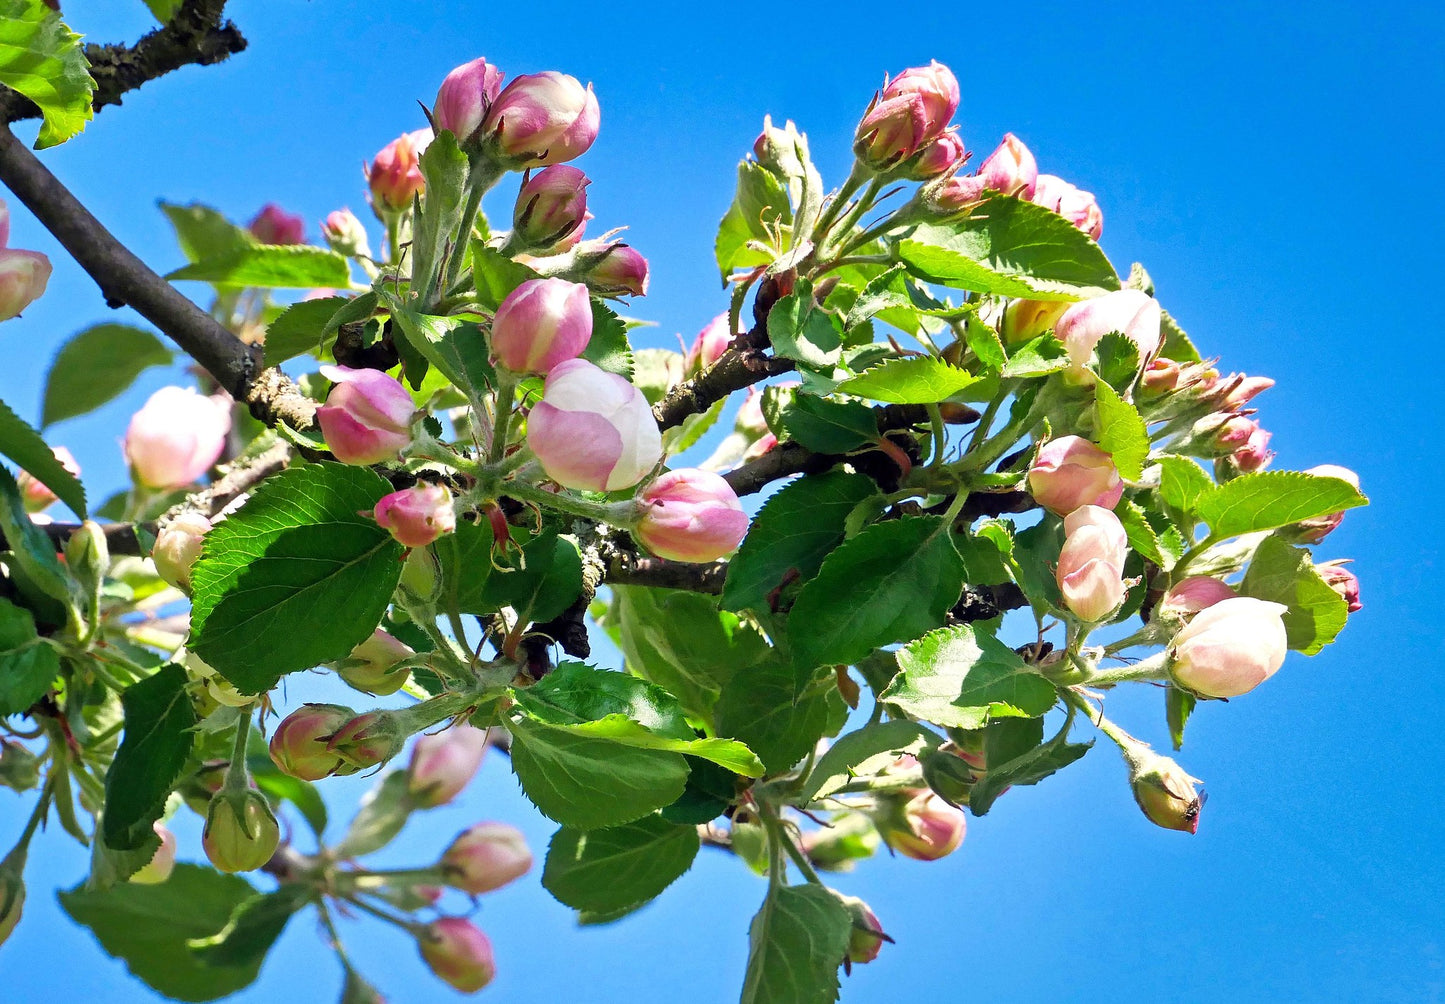 Apple Tree Malus domestica 100 Seeds  USA Company